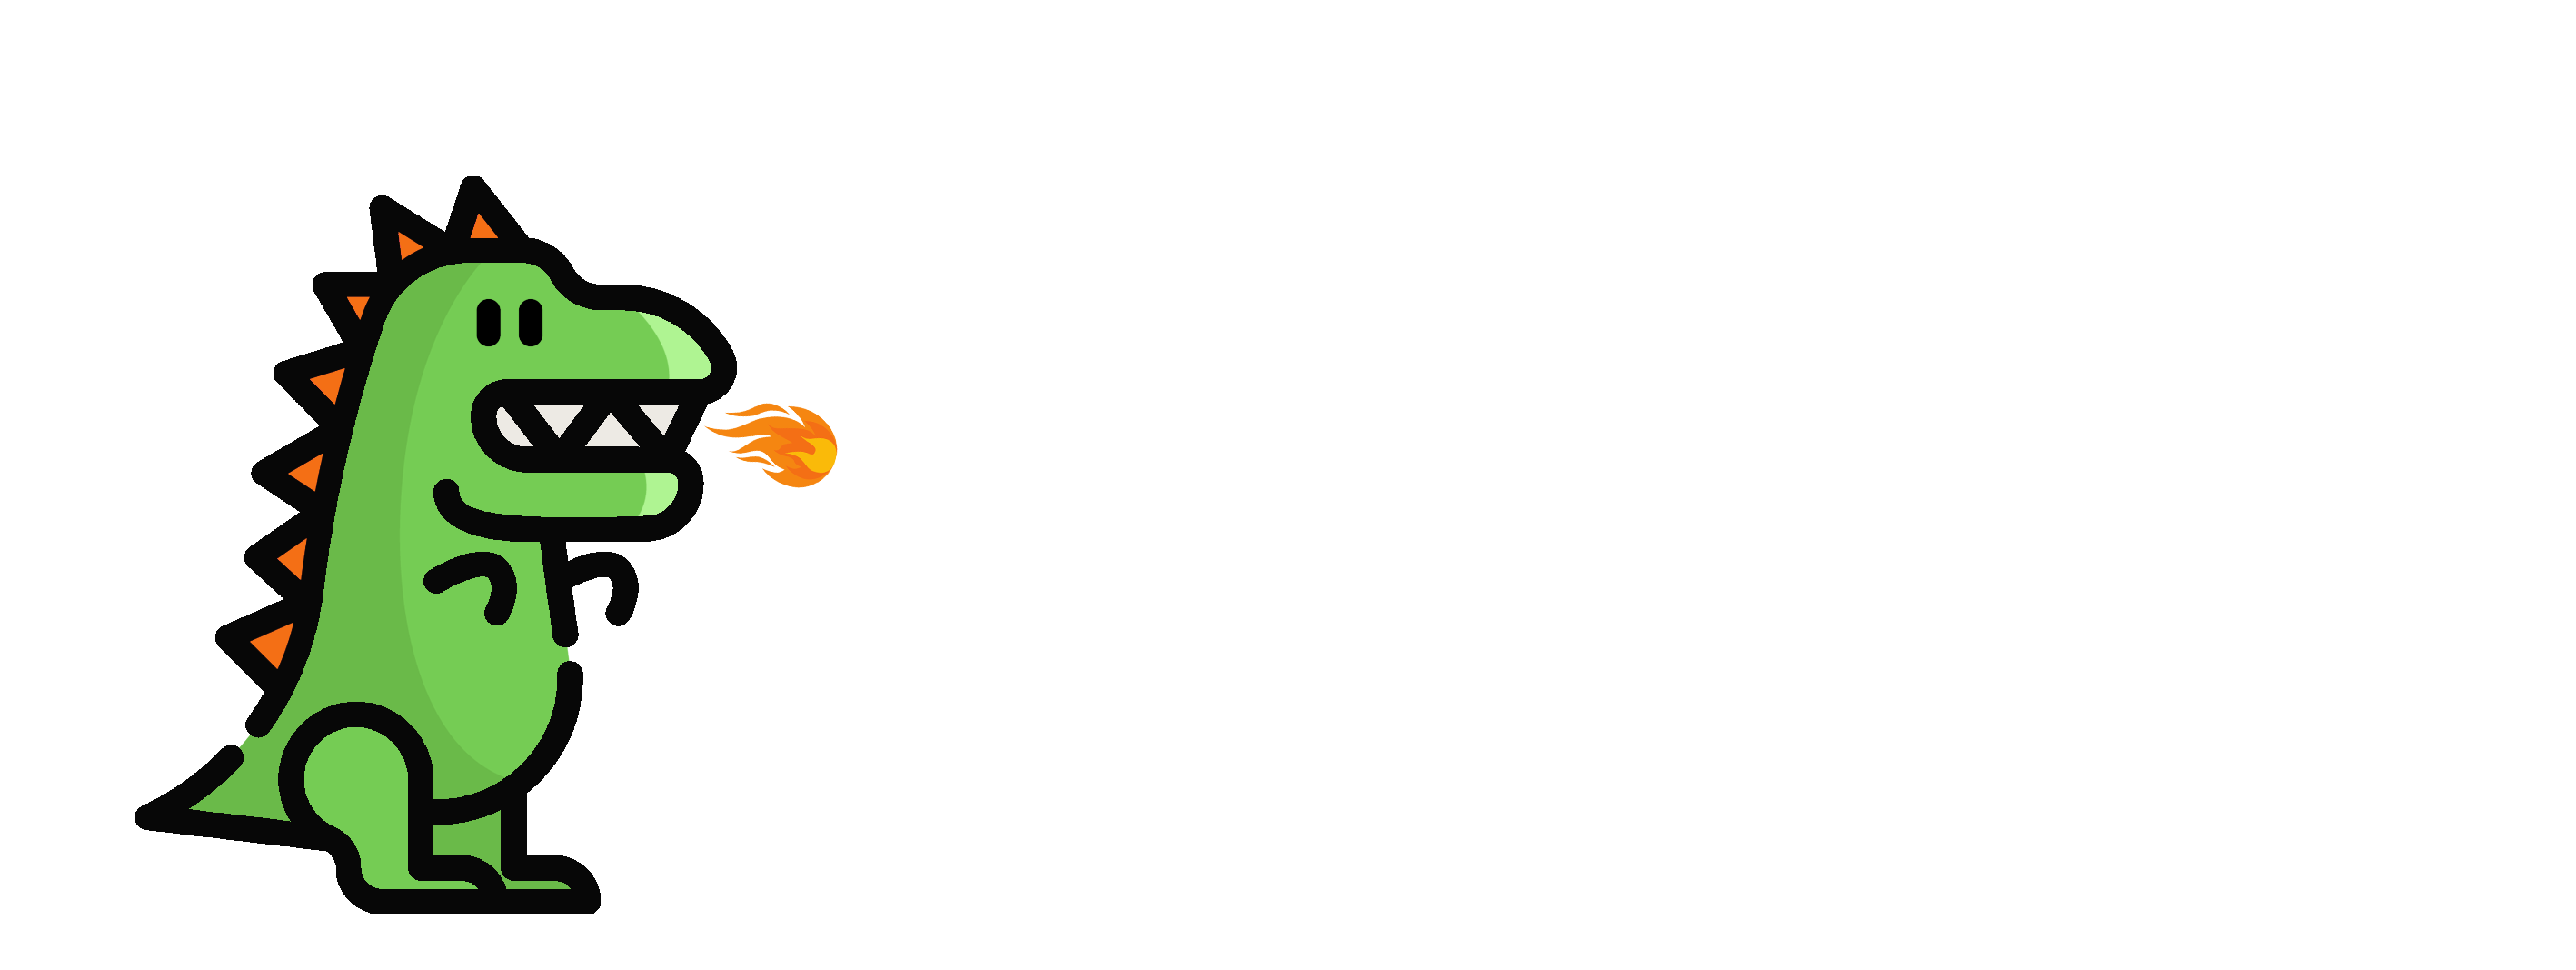 Harriett Name Animated GIF Logo Designs